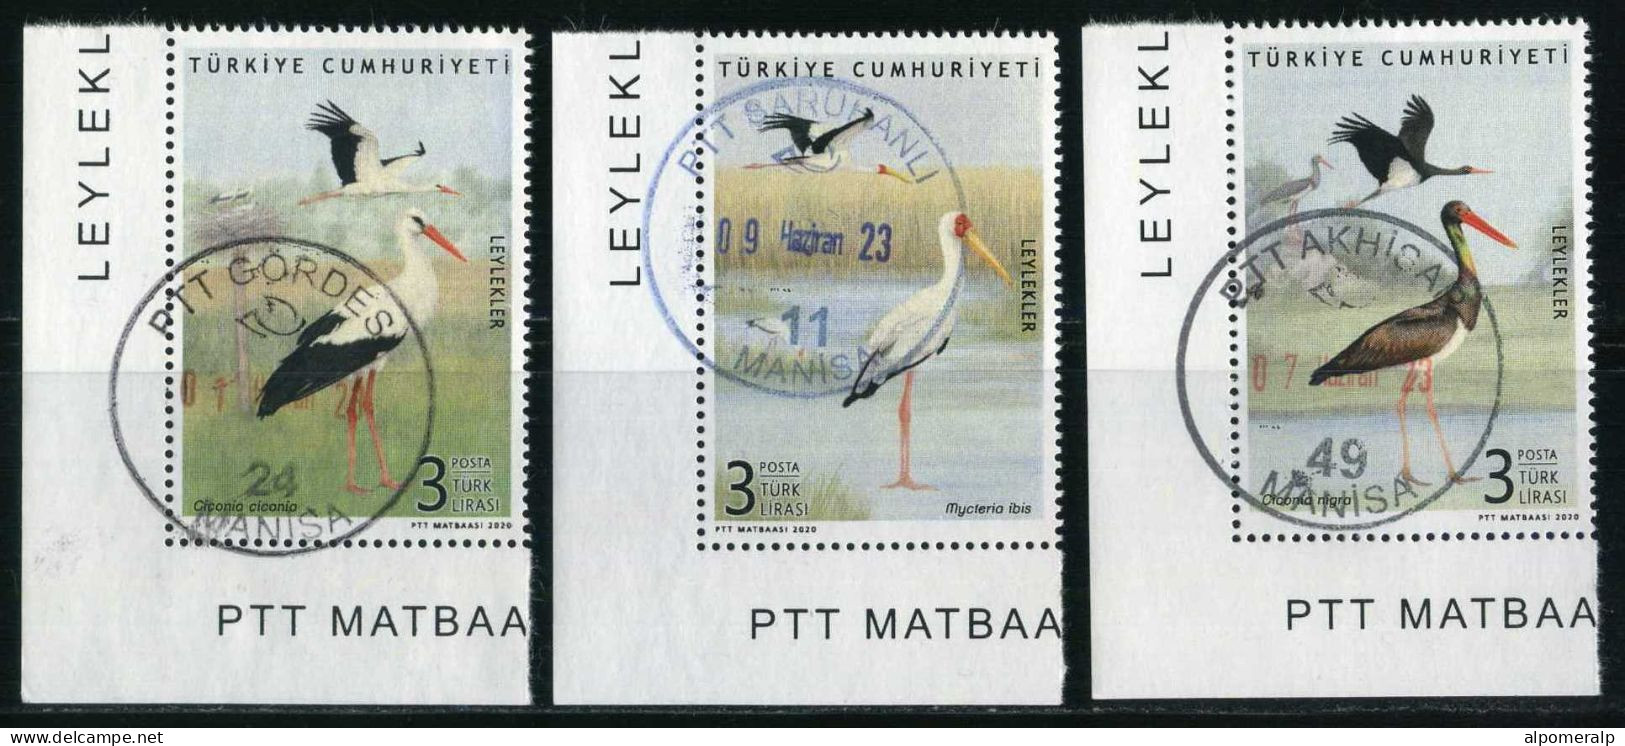 Türkiye 2020 Mi 4597-4599 Storks: White Stork, Yellow-Billed Stork, Black Stork, Birds, Animals (Fauna) - Used Stamps